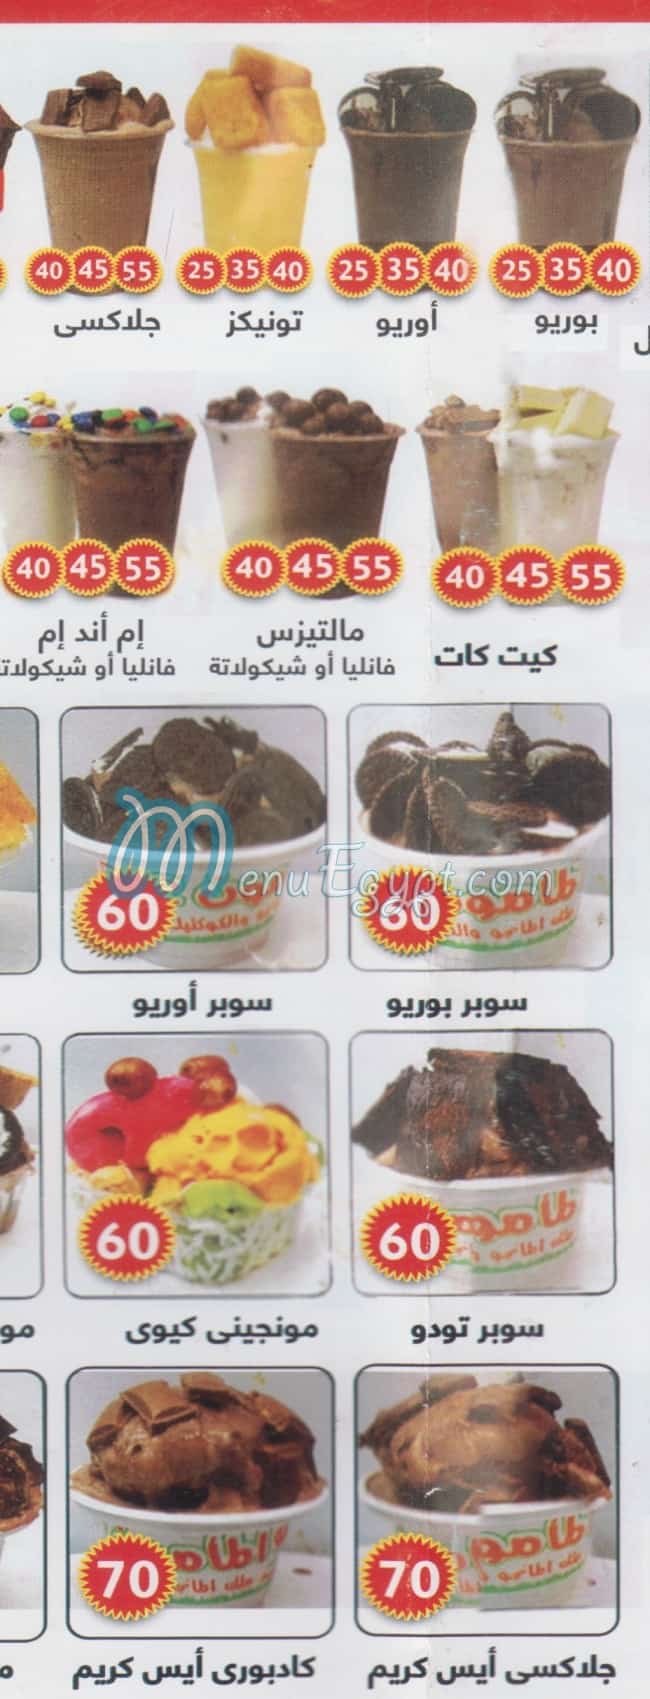 el mamoun juice menu Egypt